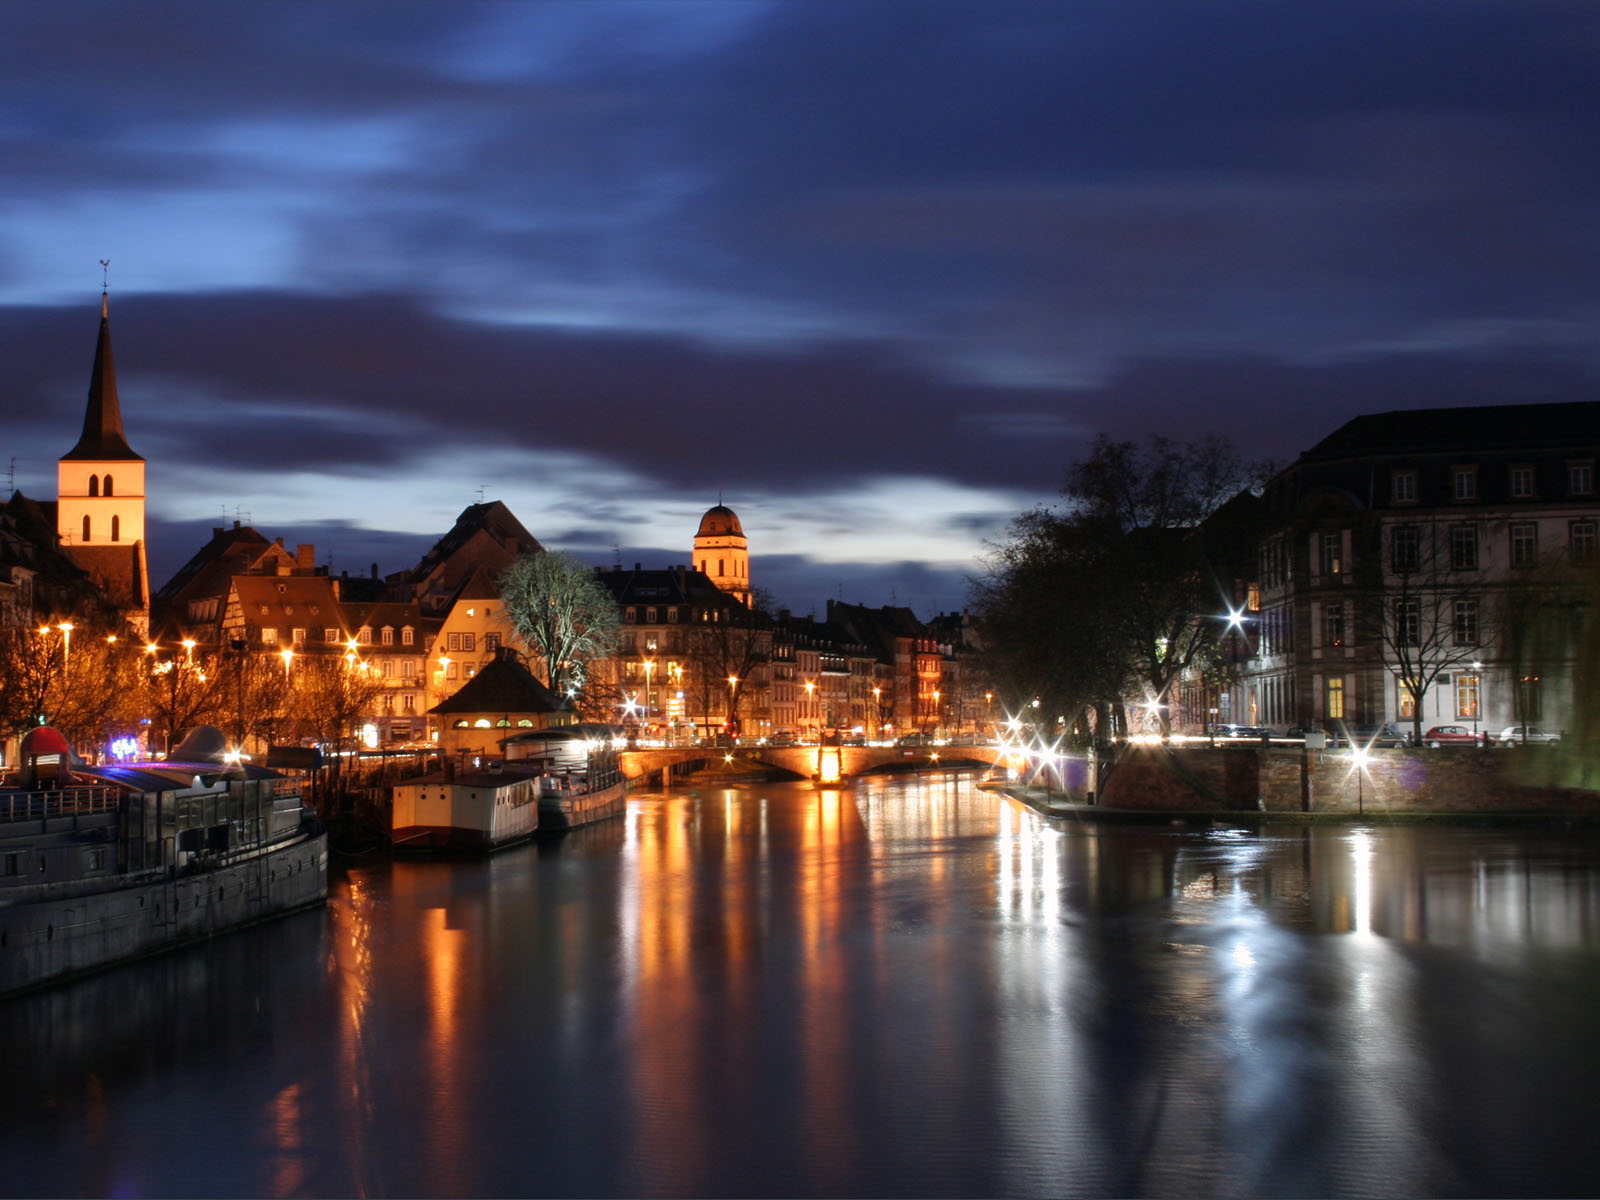 Fond d'ecran Strasbourg la nuit